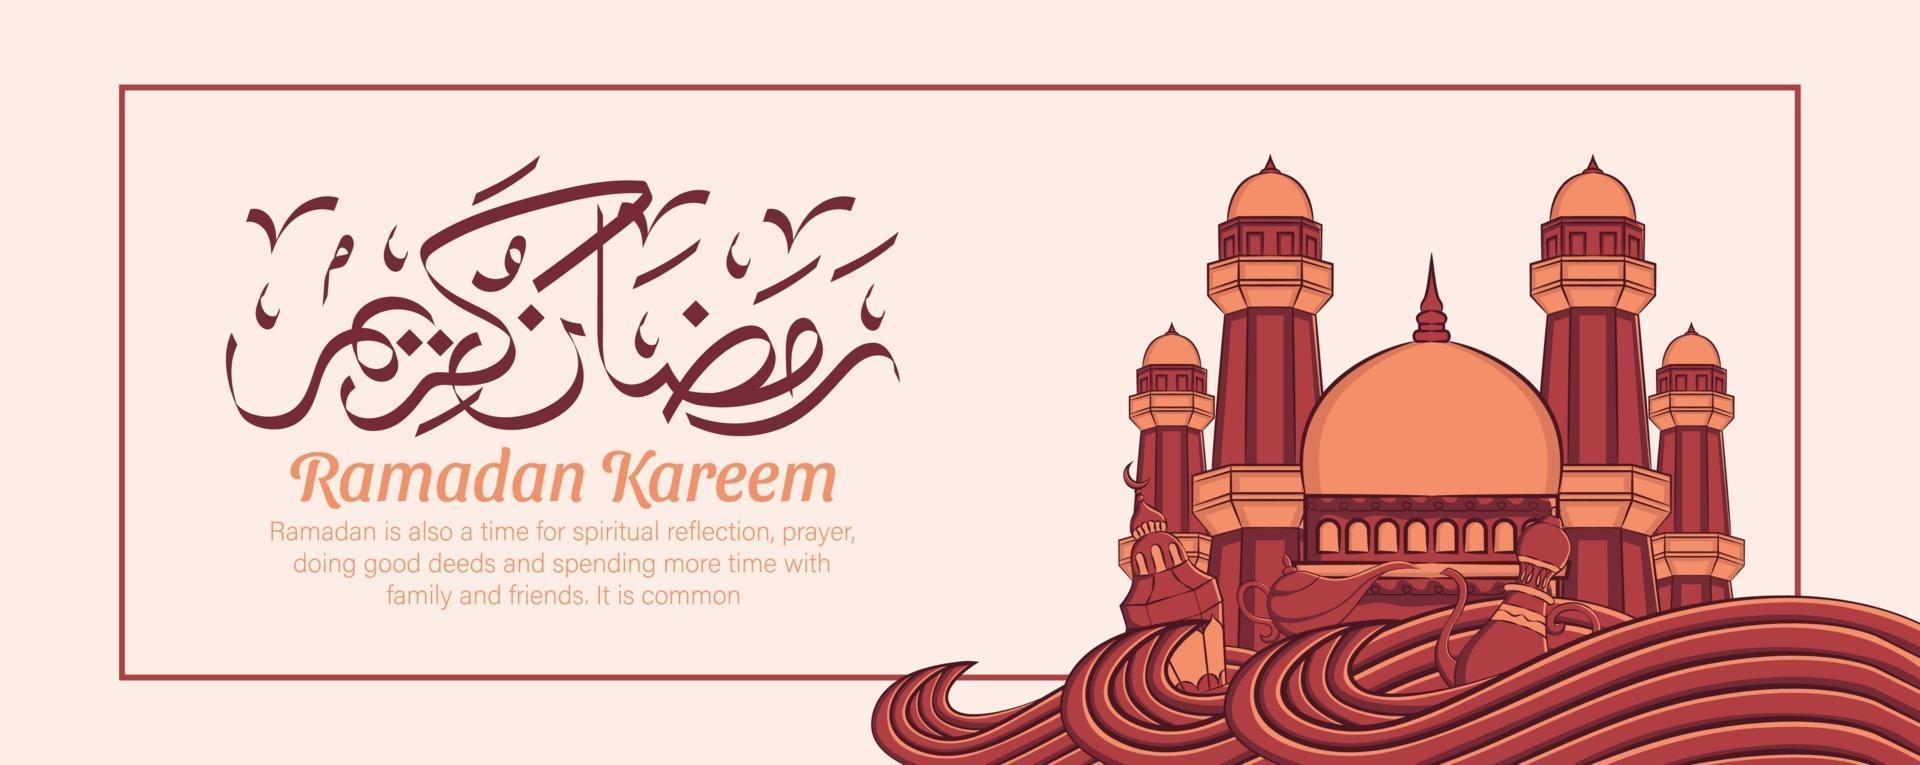 Ramadan kareem banner with hand drawn islamic illustration ornament on white background. vector